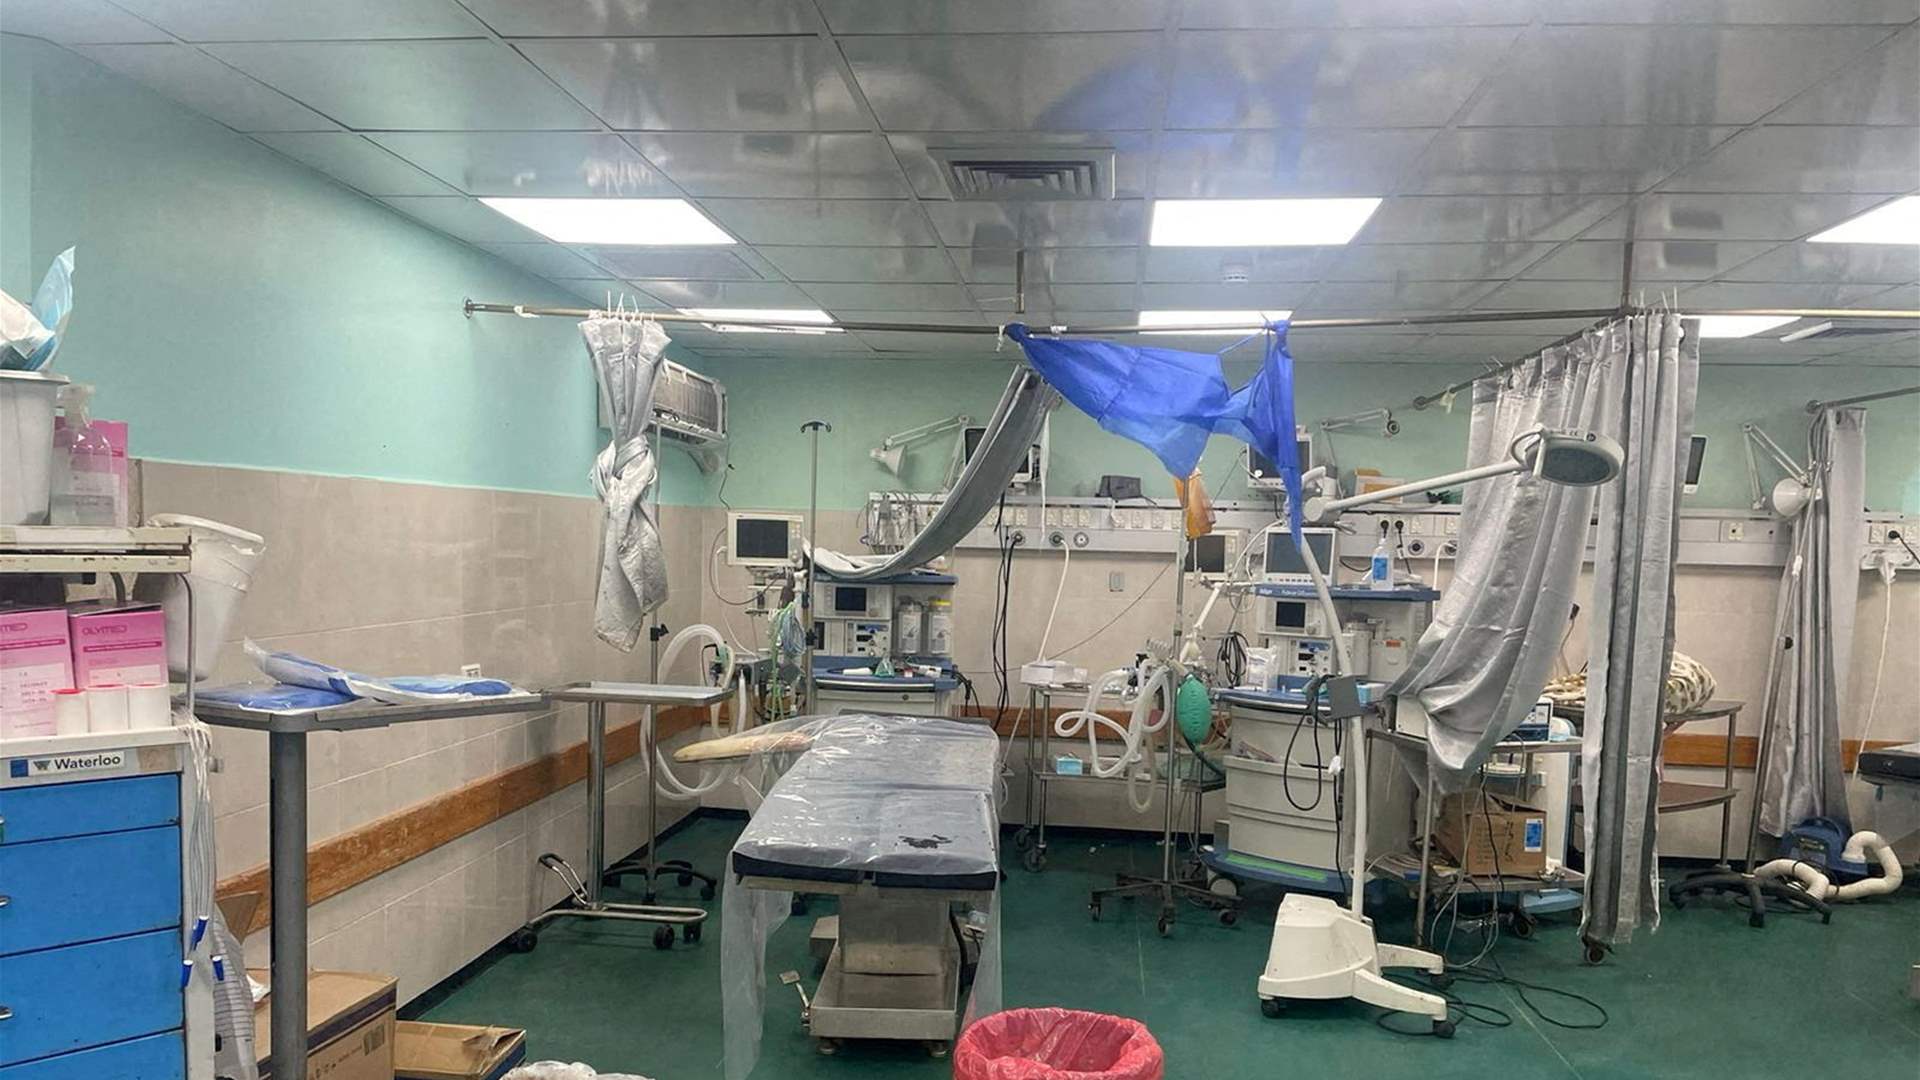 Palestine Red Crescent Society initiates evacuation process from Al-Shifa Hospital